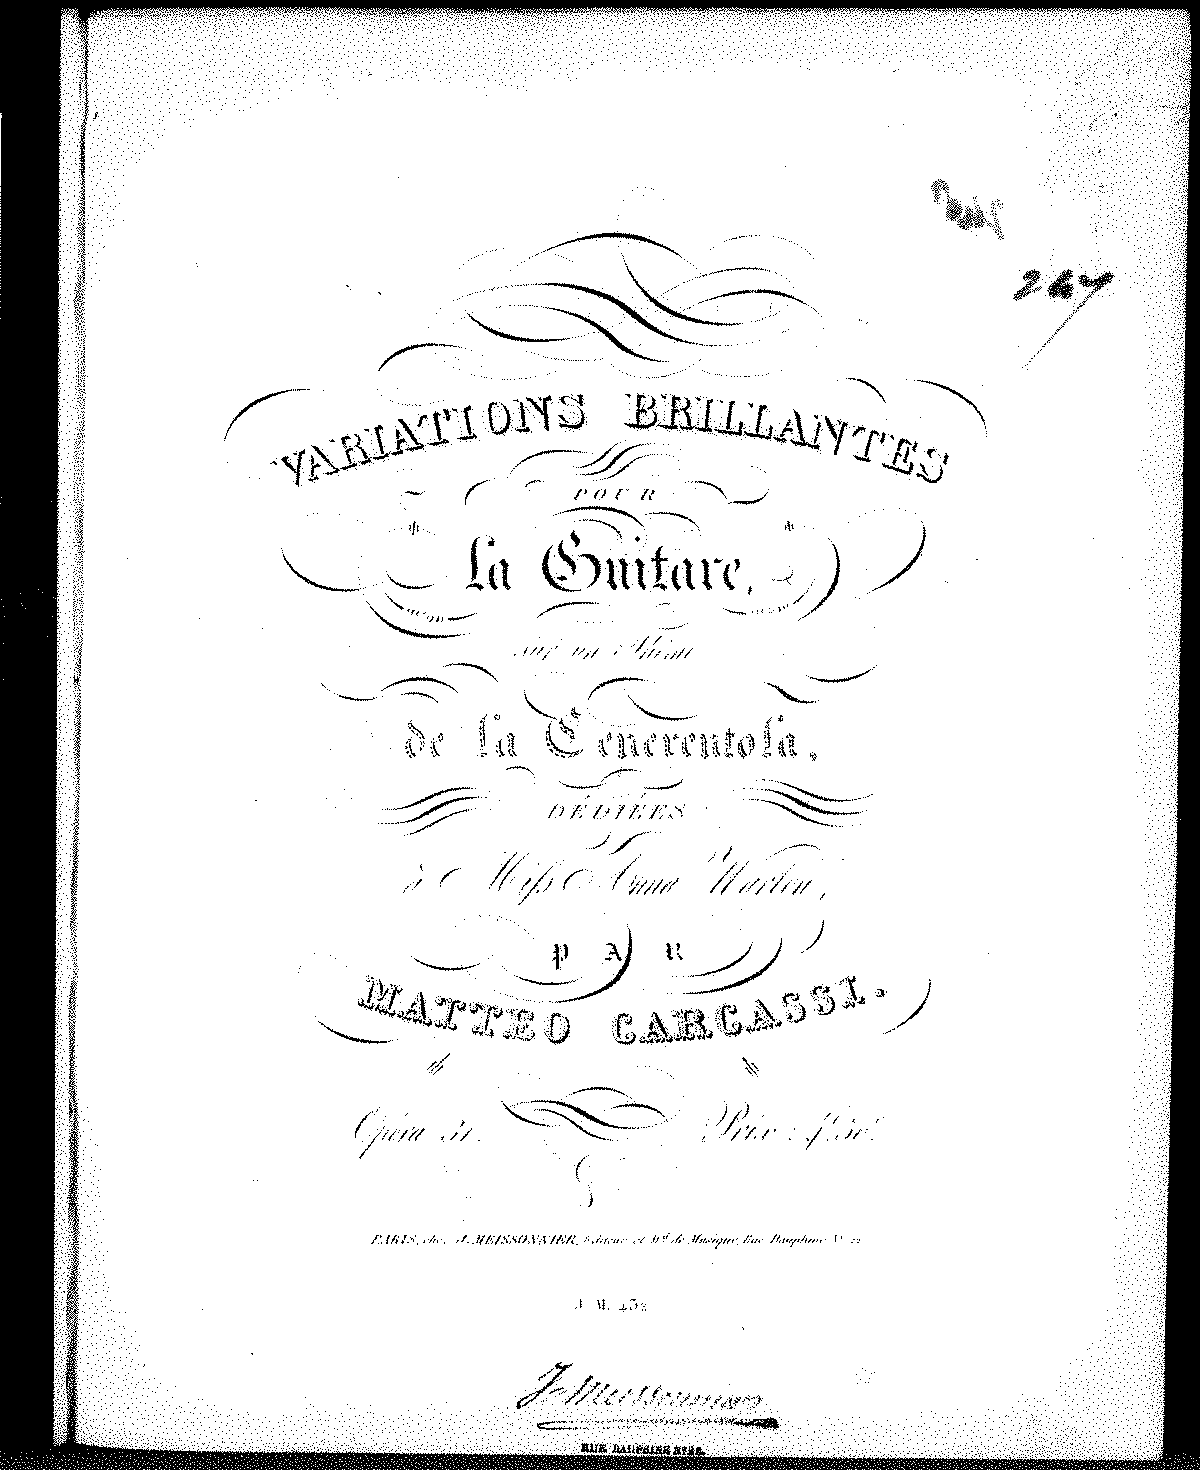 Cenerentola Variations, Op.31 (Carcassi, Matteo) - IMSLP